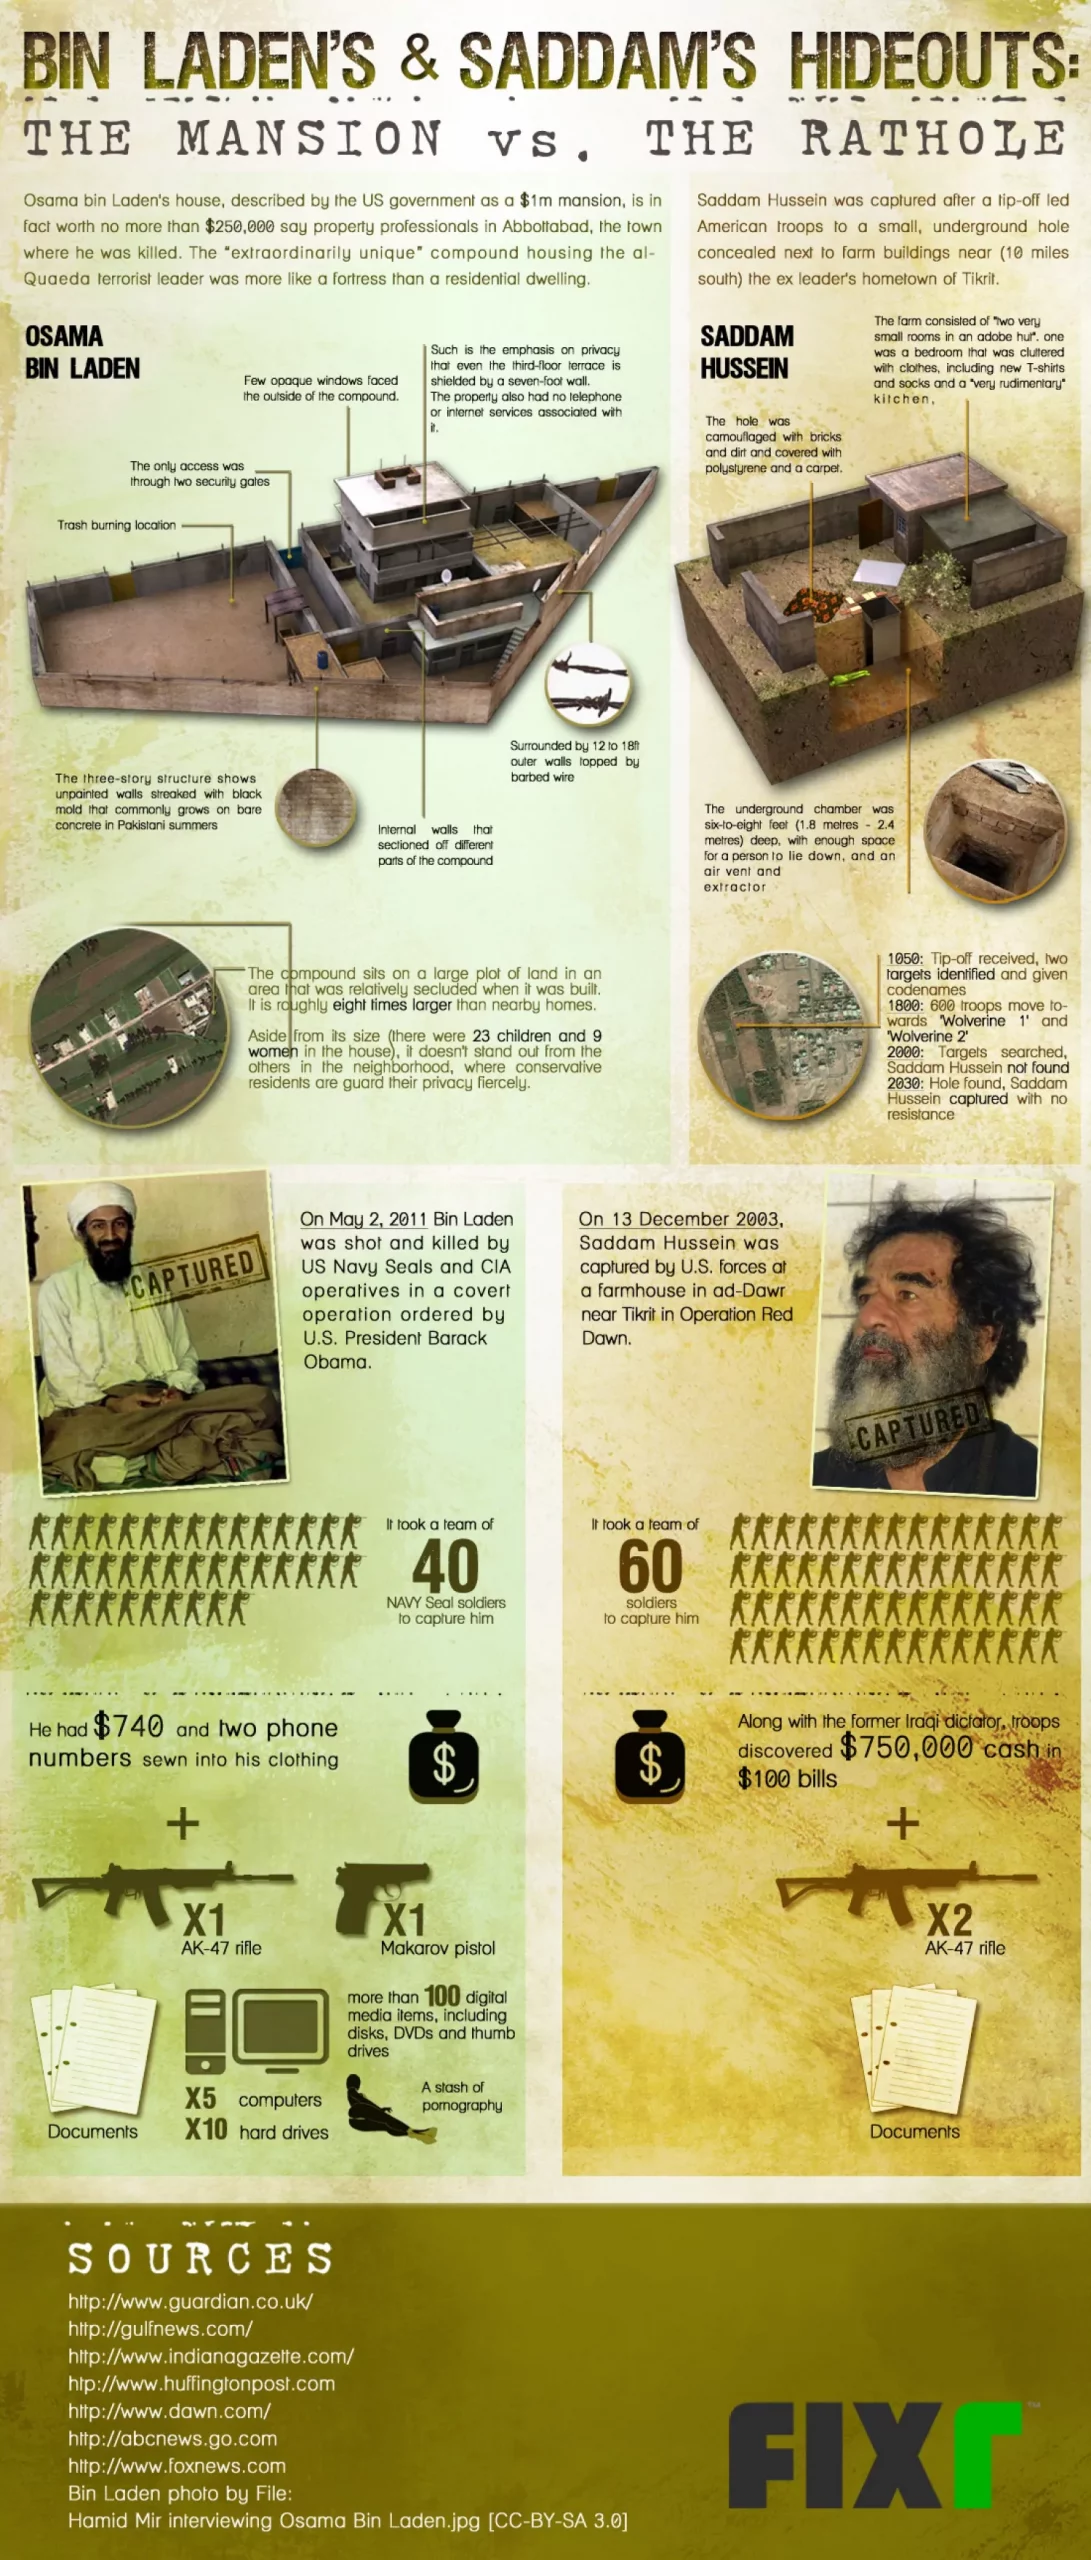 Инфографика «Убежища бен Ладена039 и Саддама039